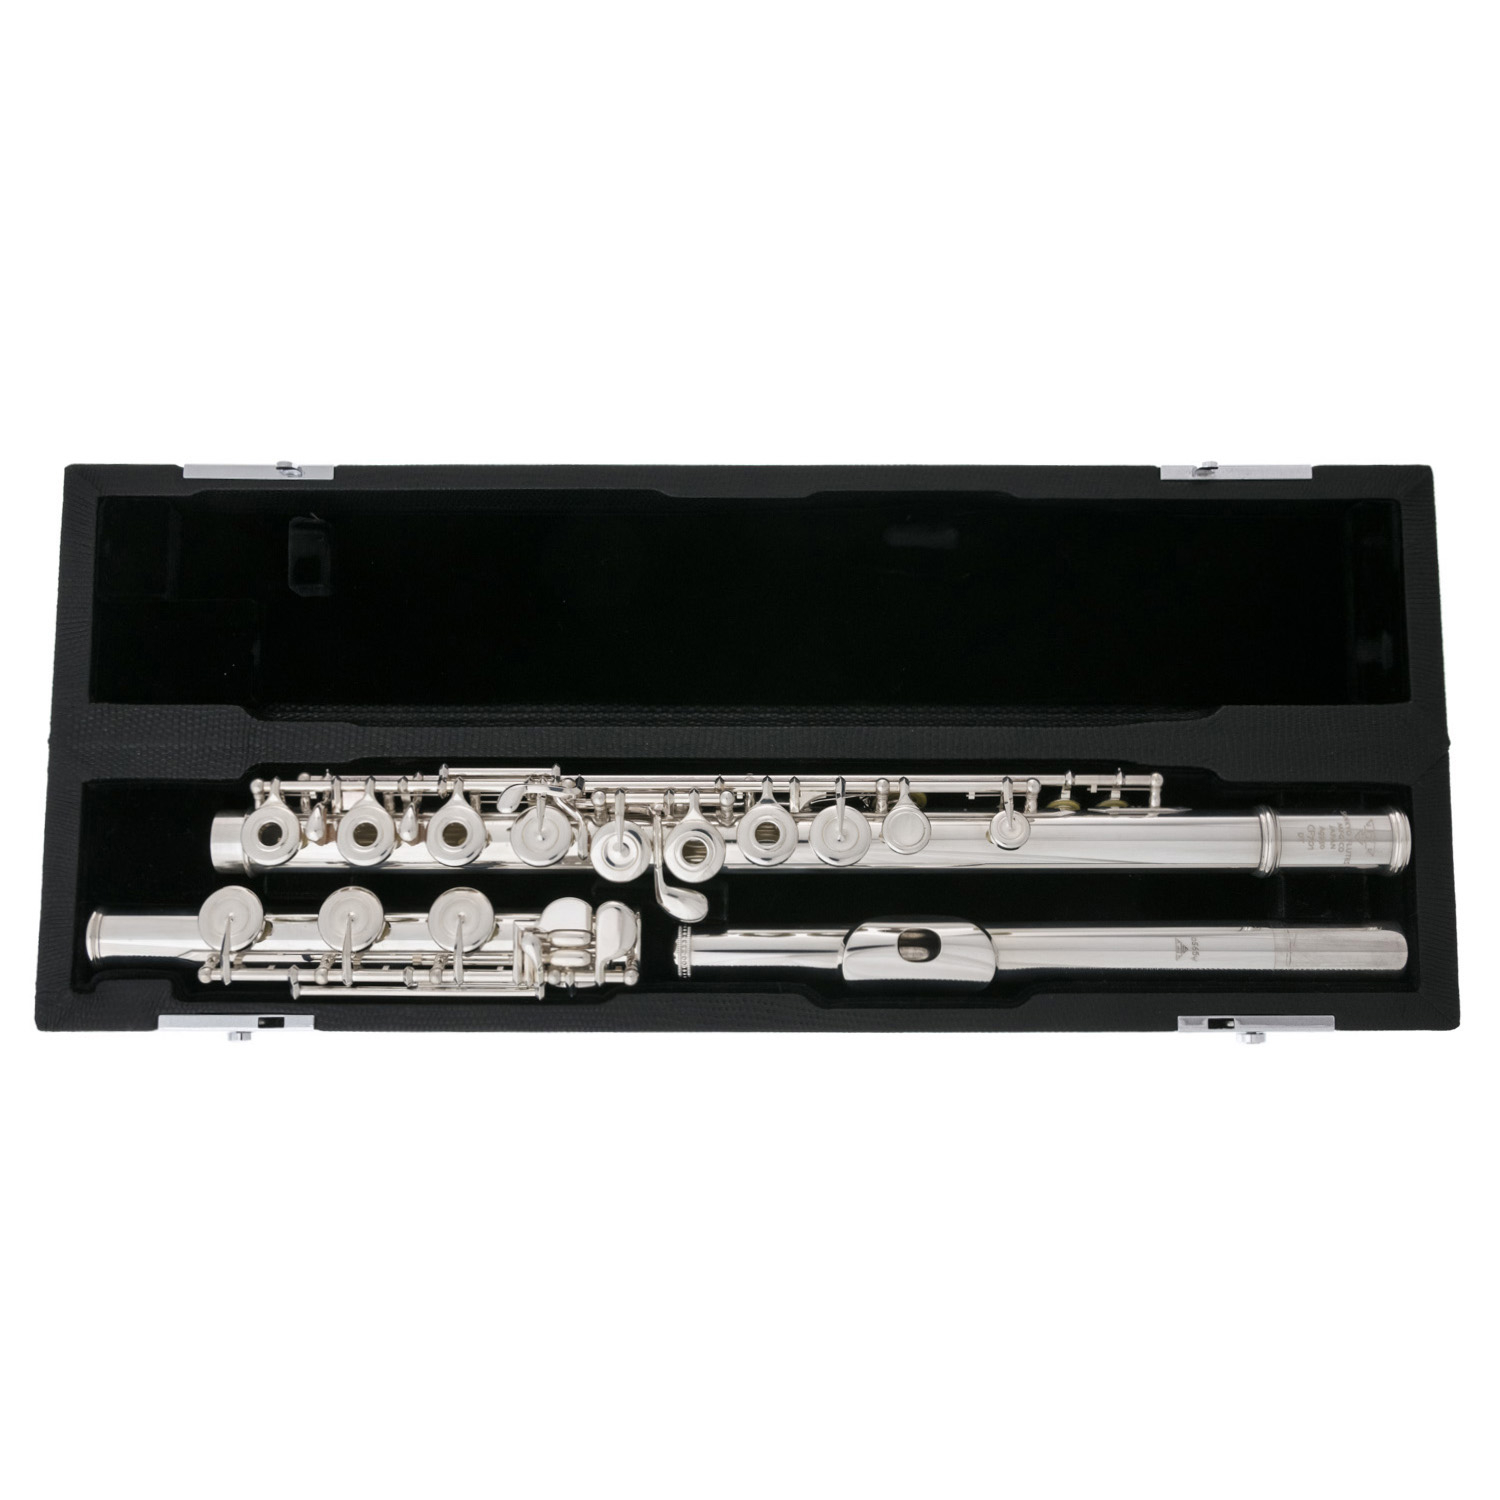 Sankyo Flute - 601 BE Handmade